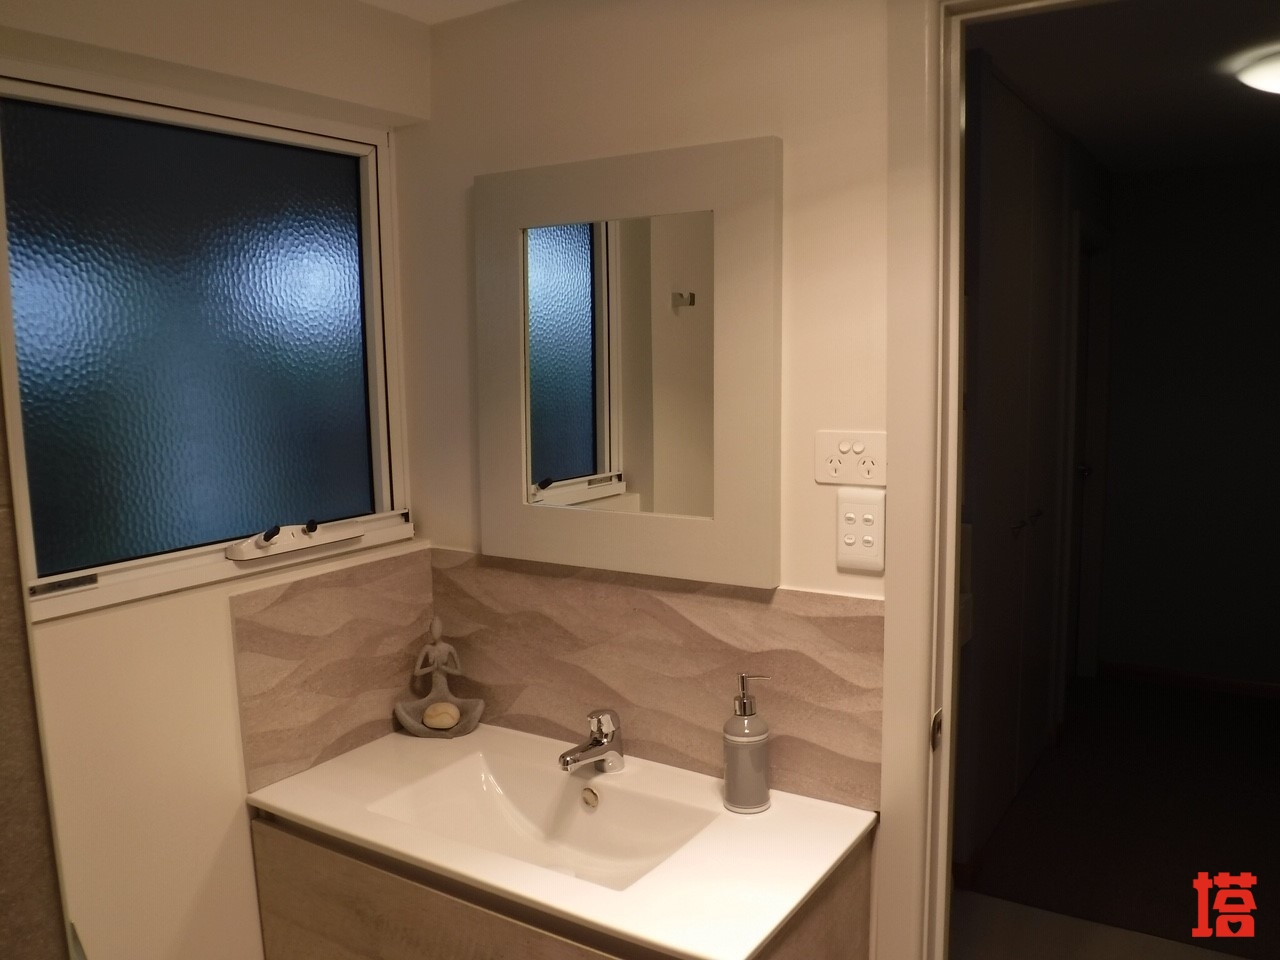 Apartment Bathroom (2).jpg